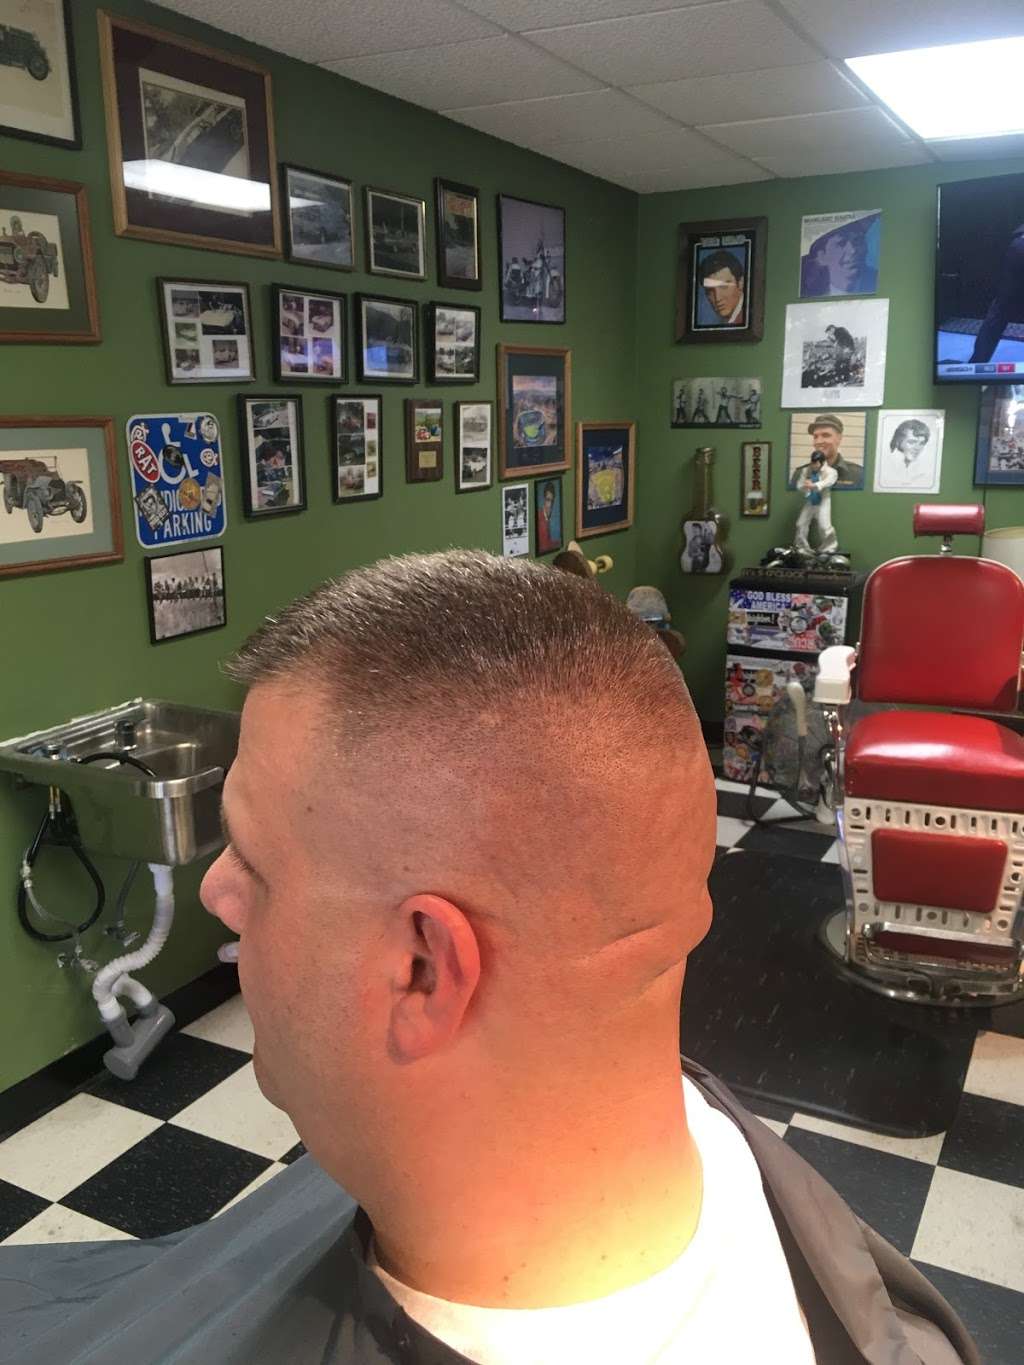 Wolfman Jays barber shop & shave parlor | 235 Main St, Highland Falls, NY 10928, USA | Phone: (845) 859-4333